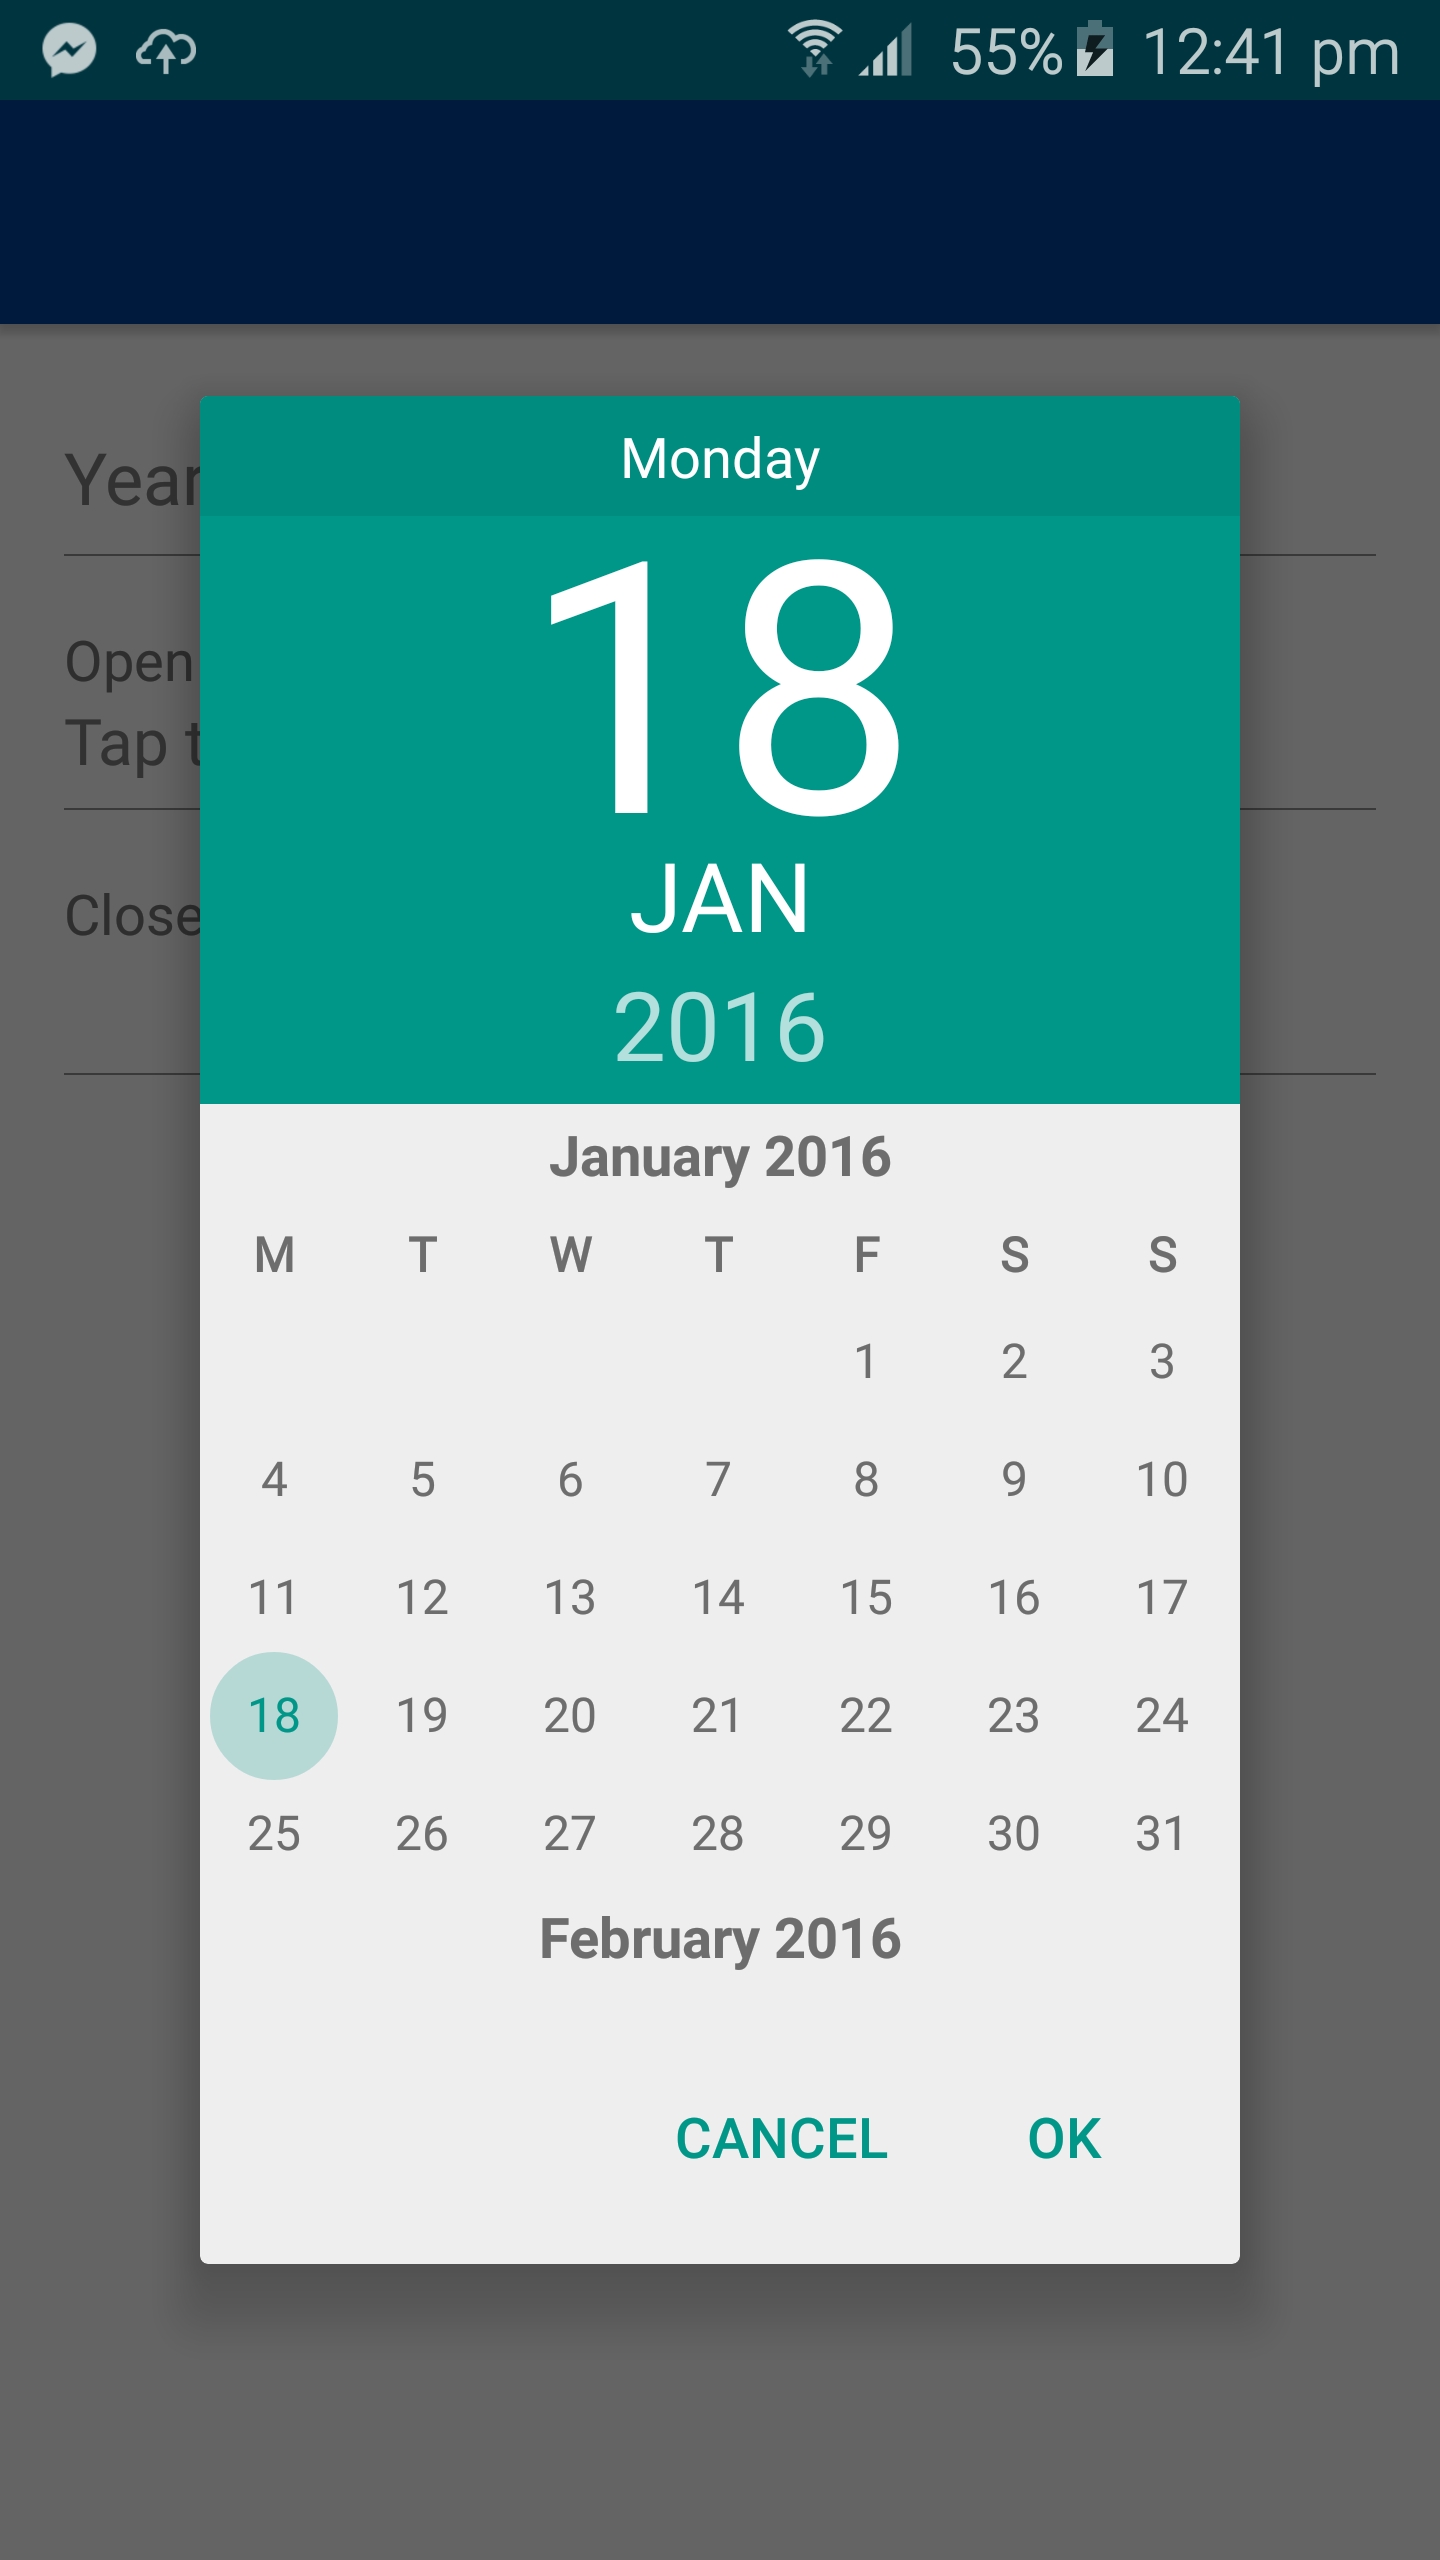 Dateformat Produce Wrong Year - Stack Overflow Java 8 Calendar Get Month